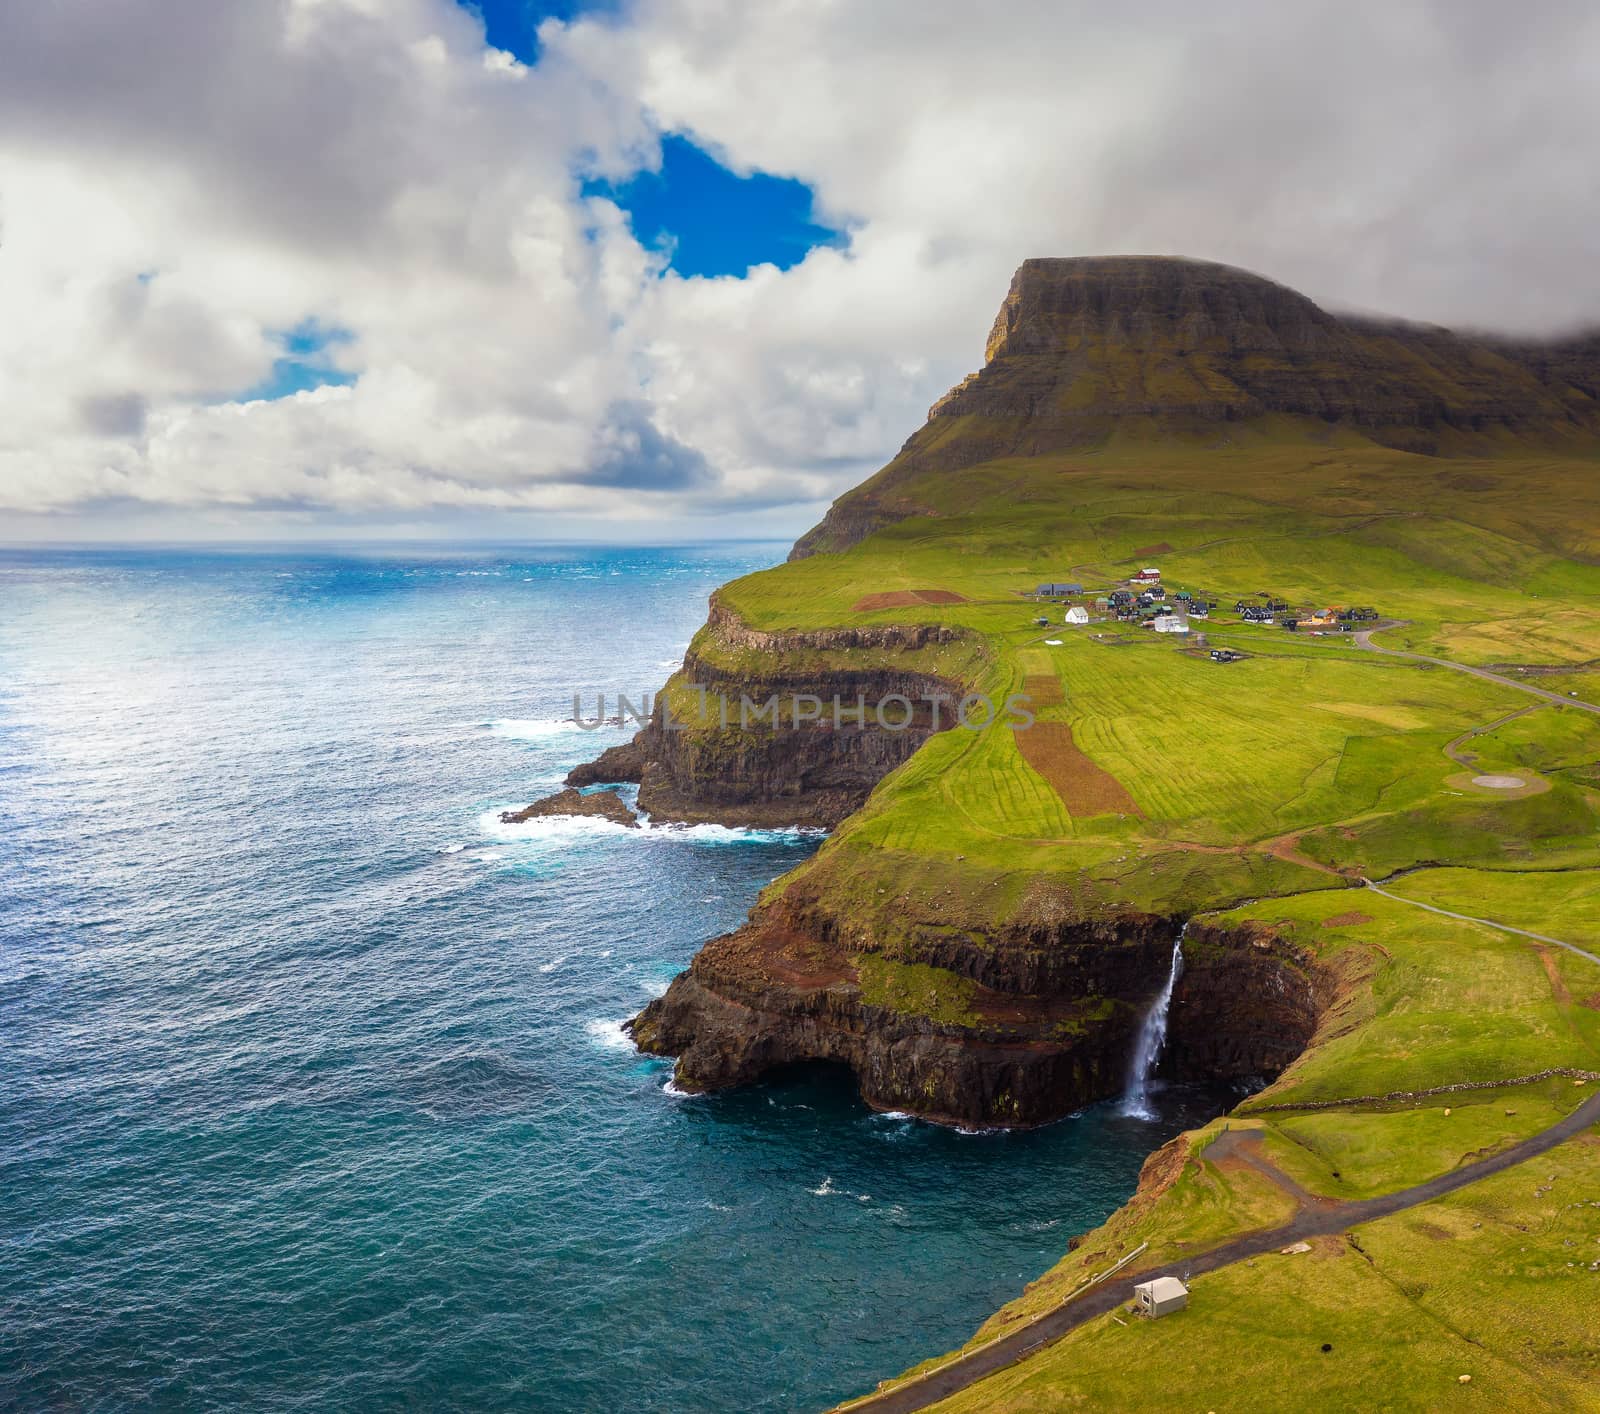 Aerial view of Gasadalur village and its waterfall in Faroe Islands, Denmark by nickfox